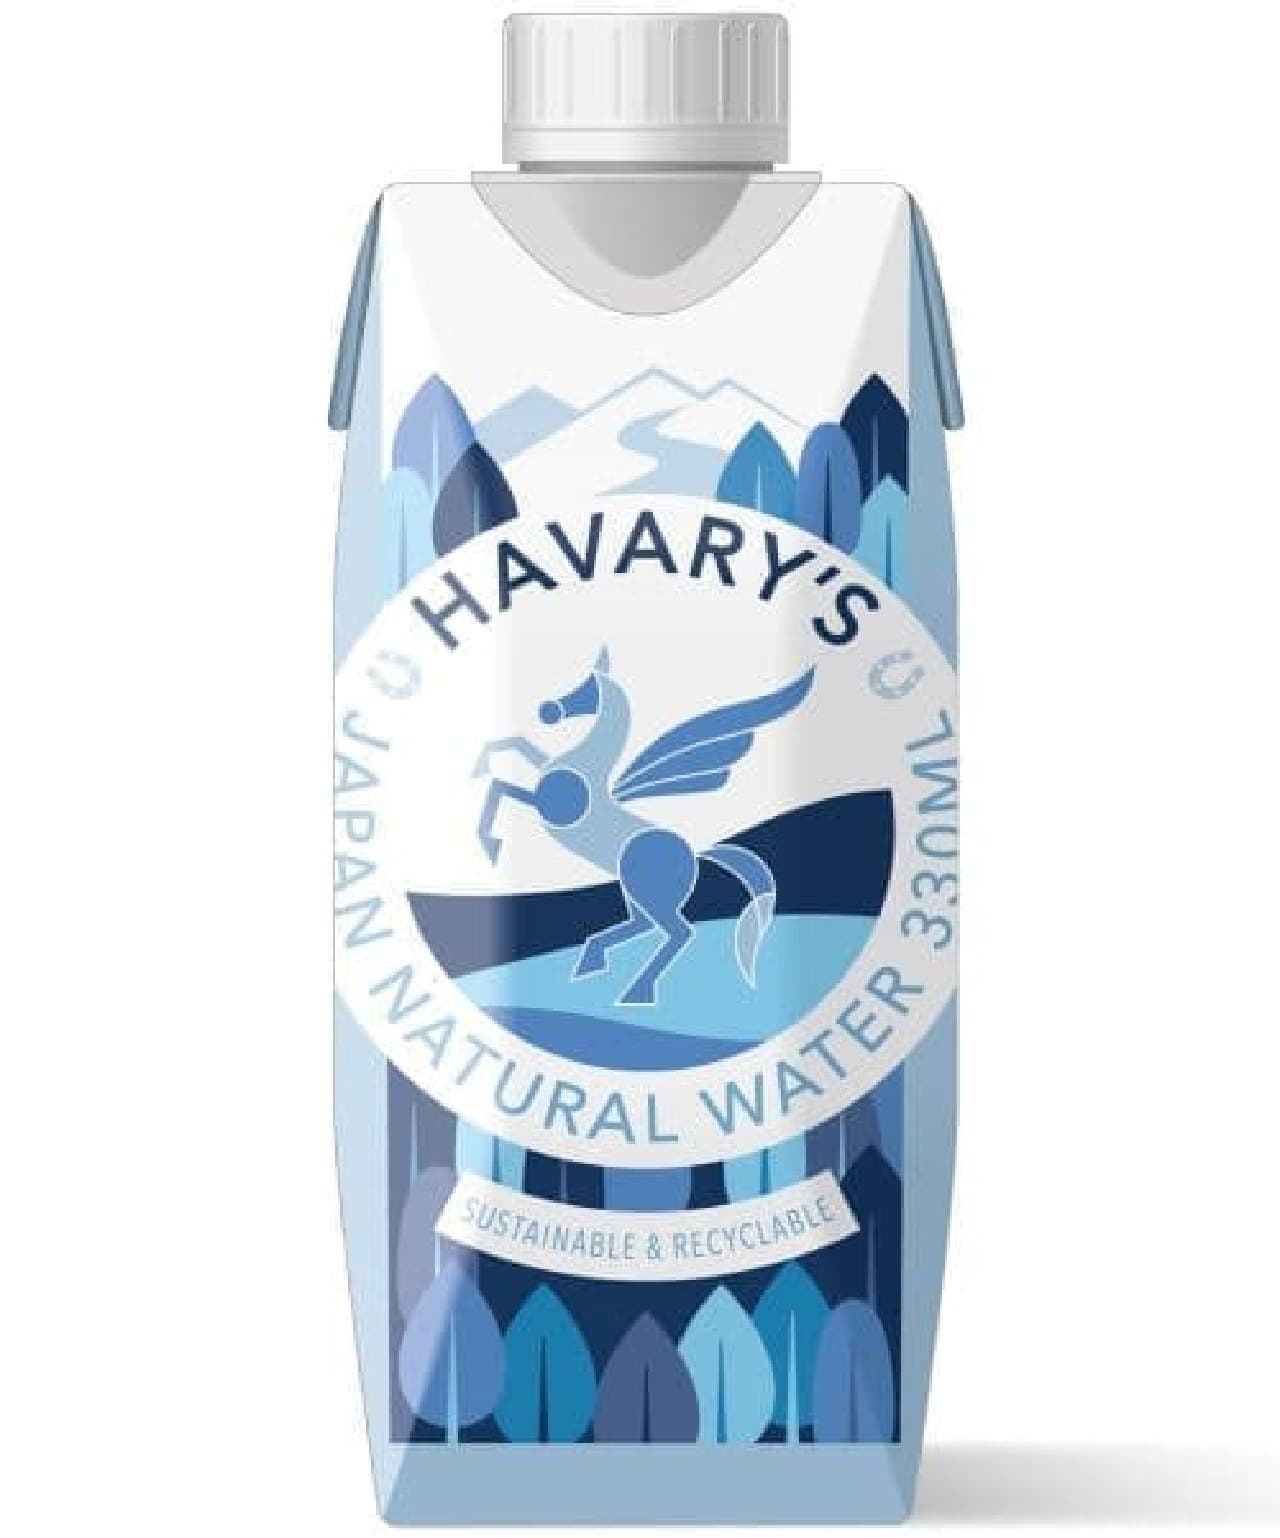 HAVARY'S JAPAN NATURAL WATER